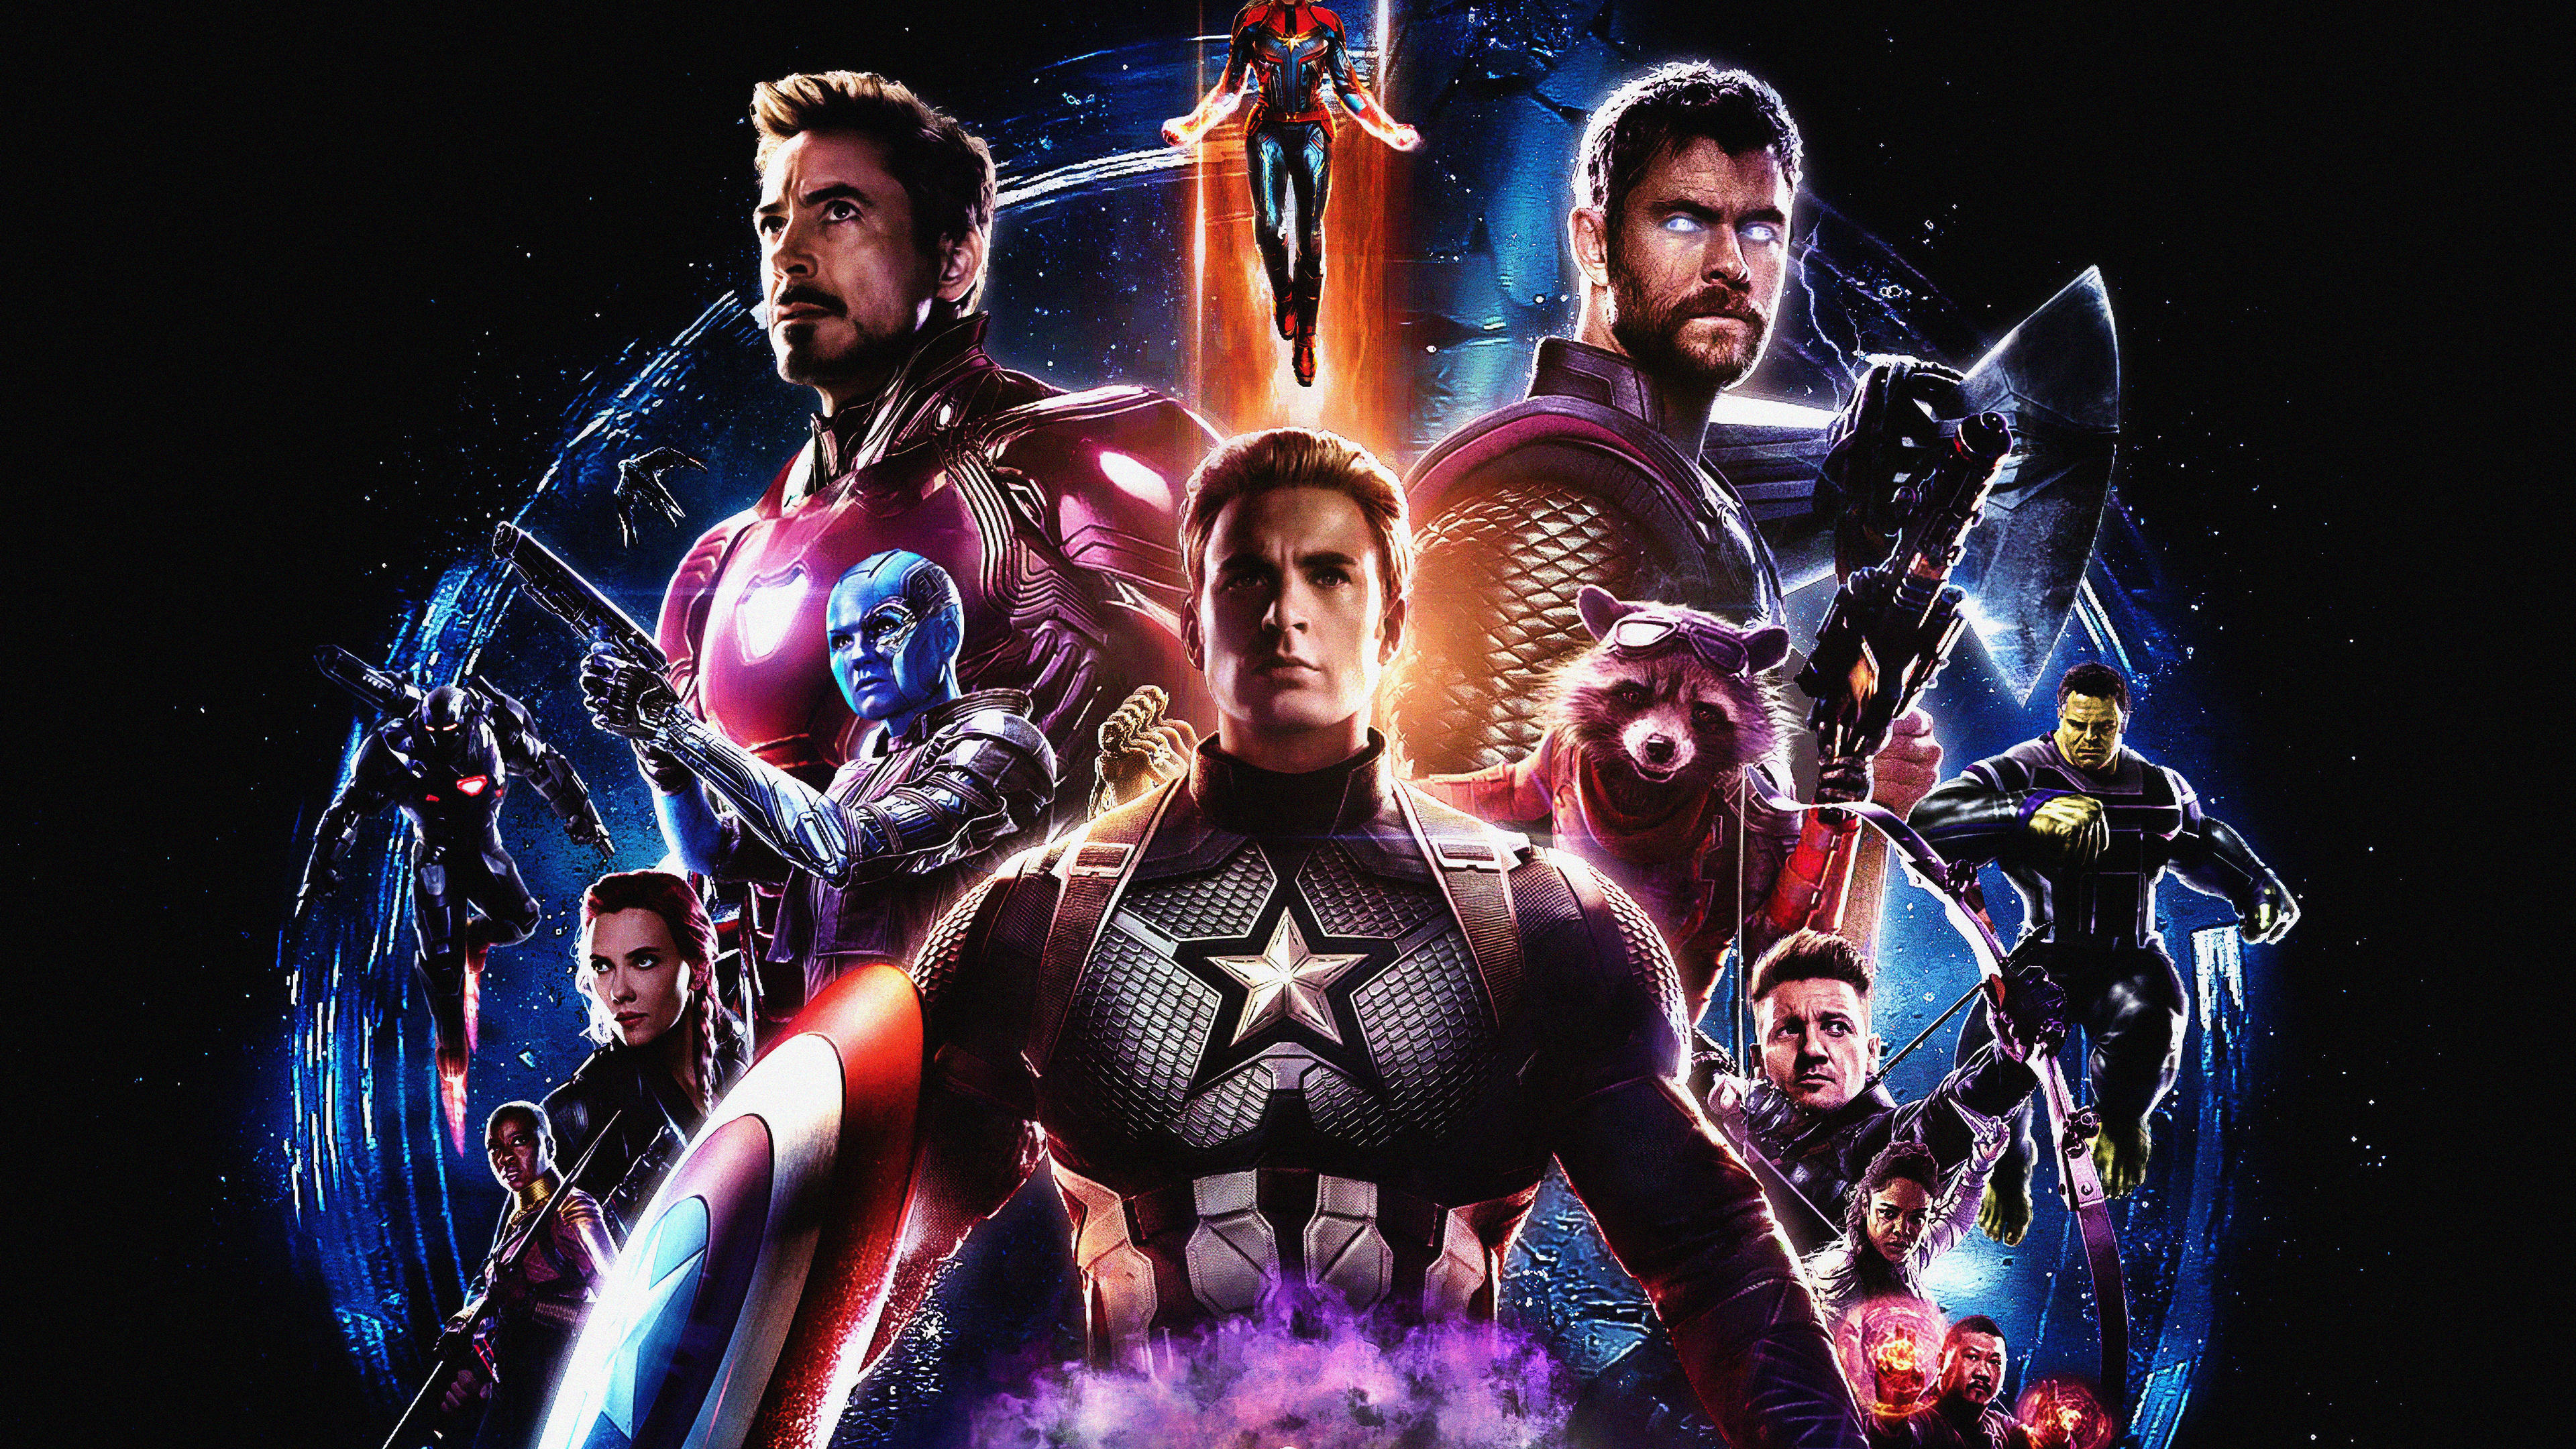 39+ Avengers Endgame Wallpaper Hd 4K Download For Pc Images